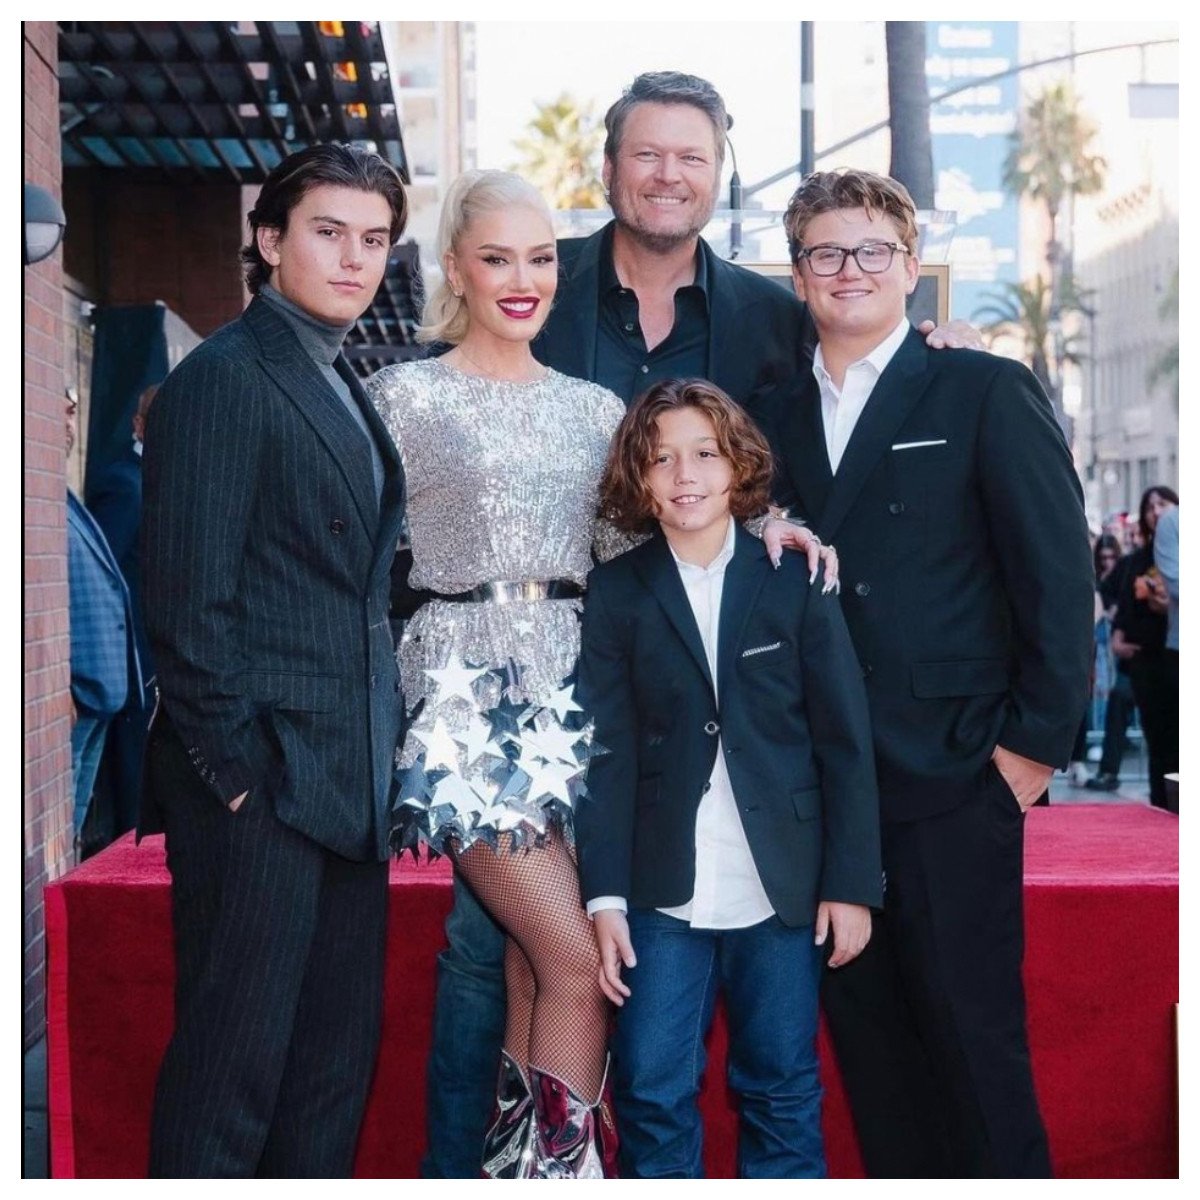 Gwen Stefani, Blake Shelton and Stefani’s kids Kingston, Zuma and Apollo make for a happy family indeed. Photo: @blakeshelton/Instagram